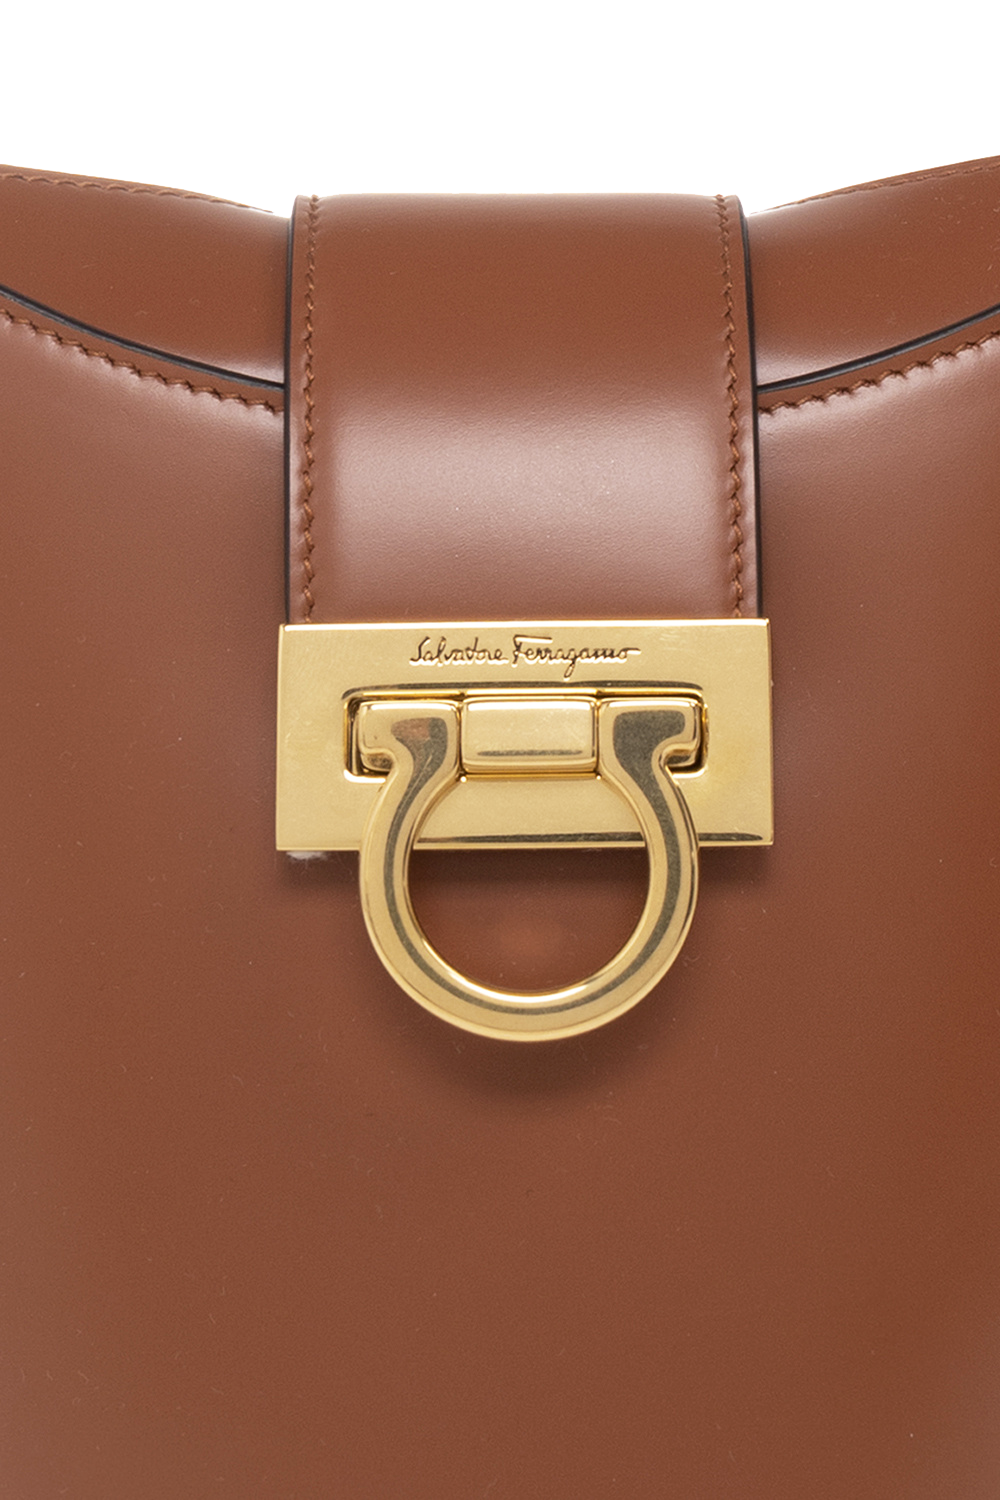 Louis-Vuitton-Monogram-Pallas-Clutch-2Way-Bag-Hand-Bag-M44058